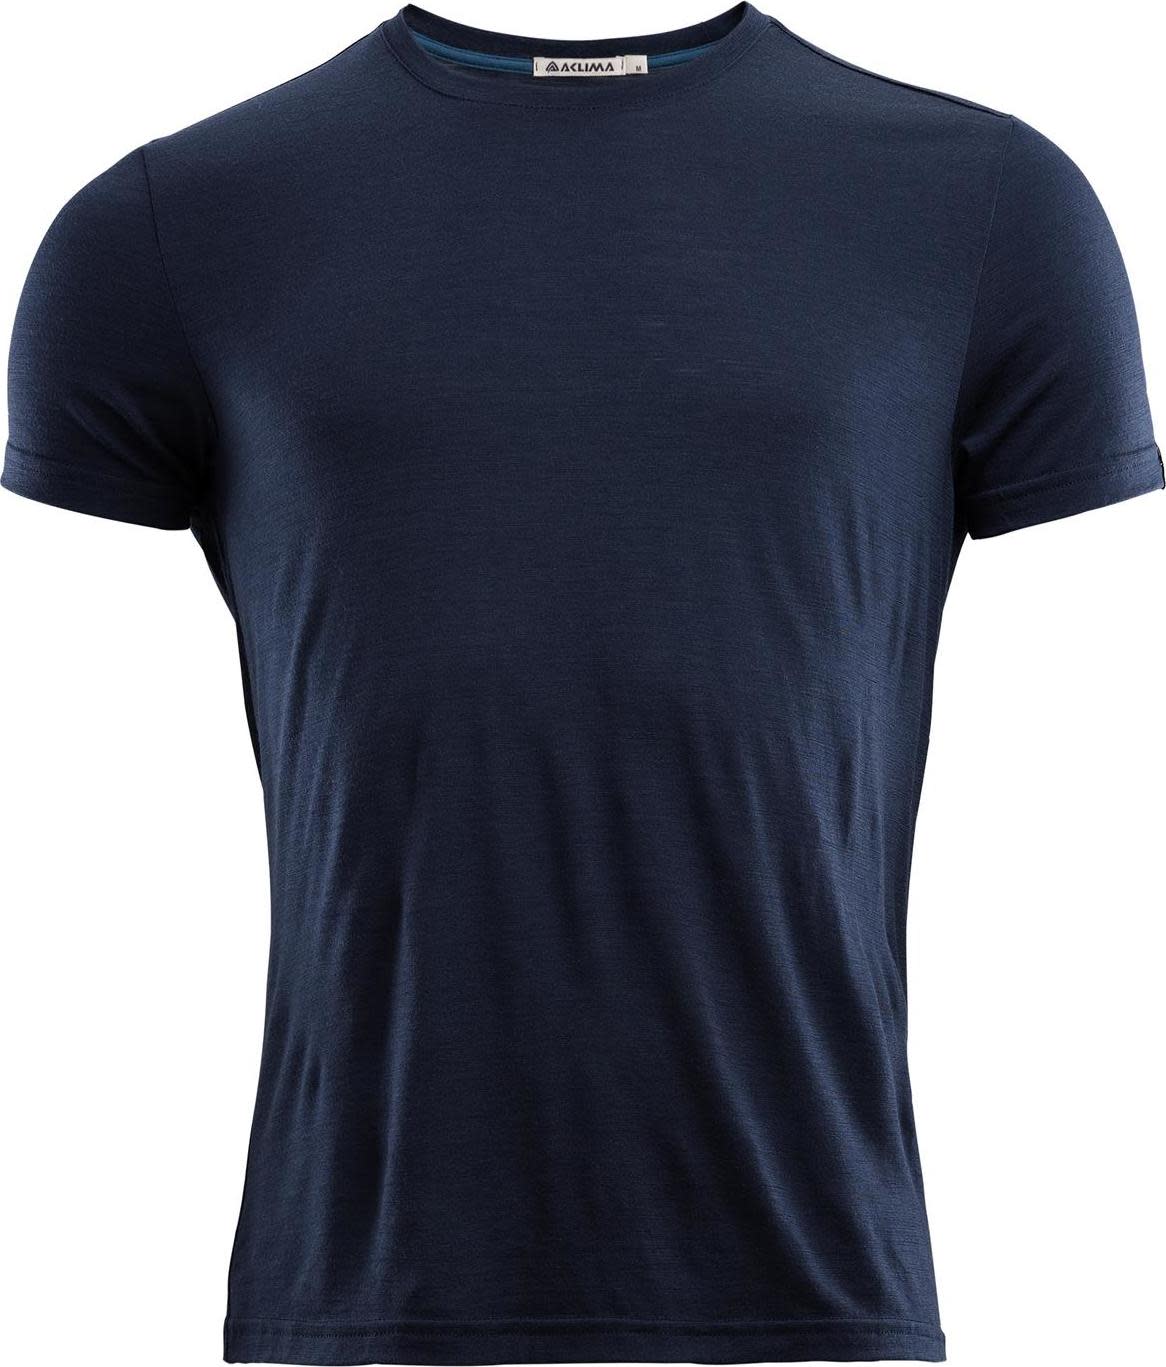 Men's LightWool Classic T-shirt Navy Blazer